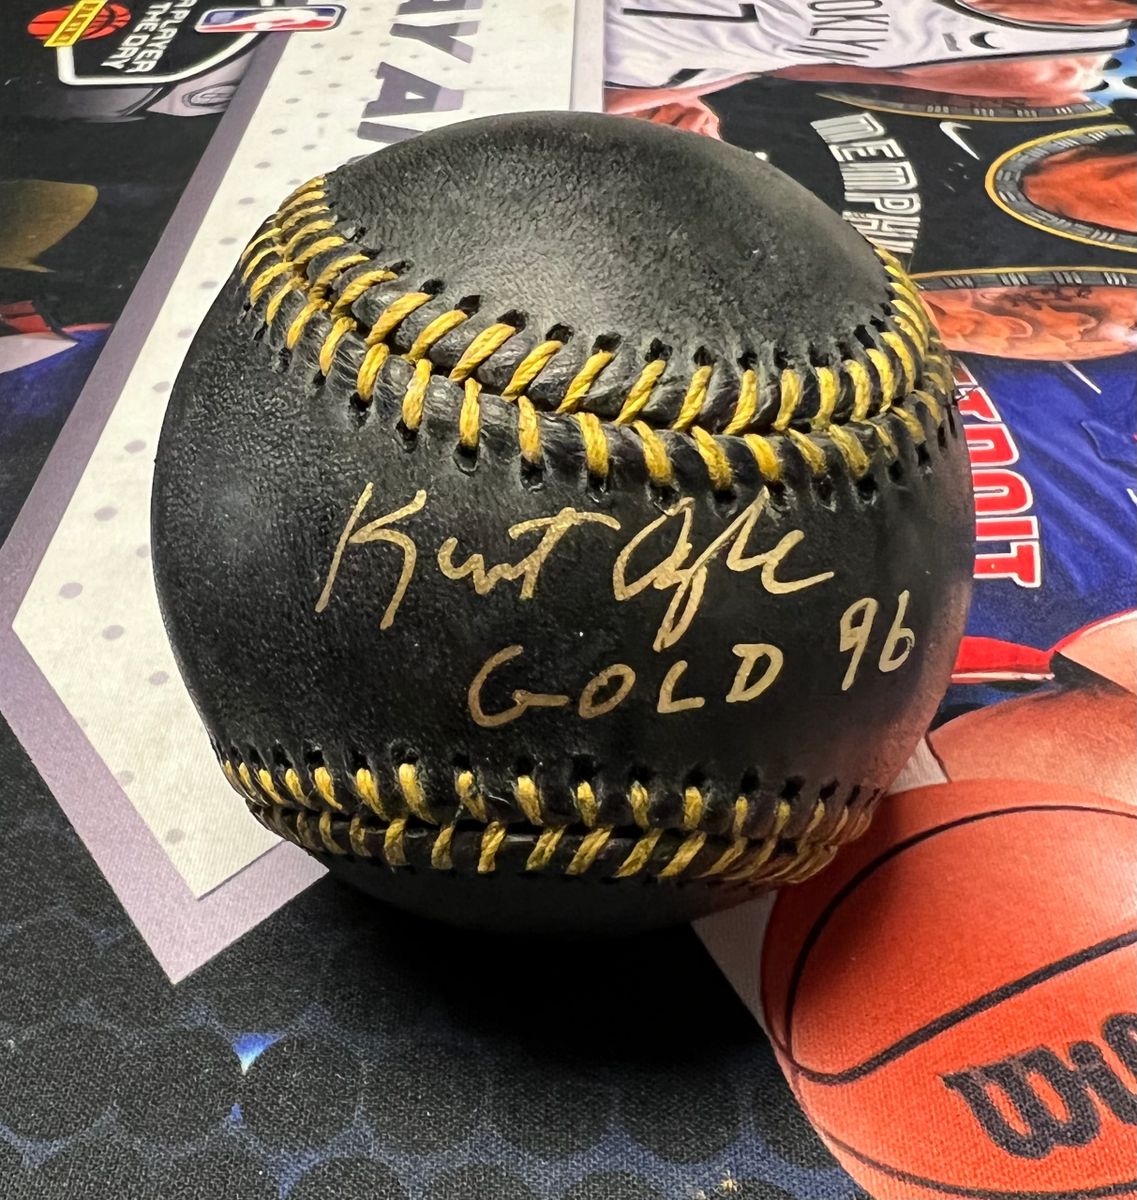 Ozzie Guillen Signed Autographed Black Baseball Jersey with JSA